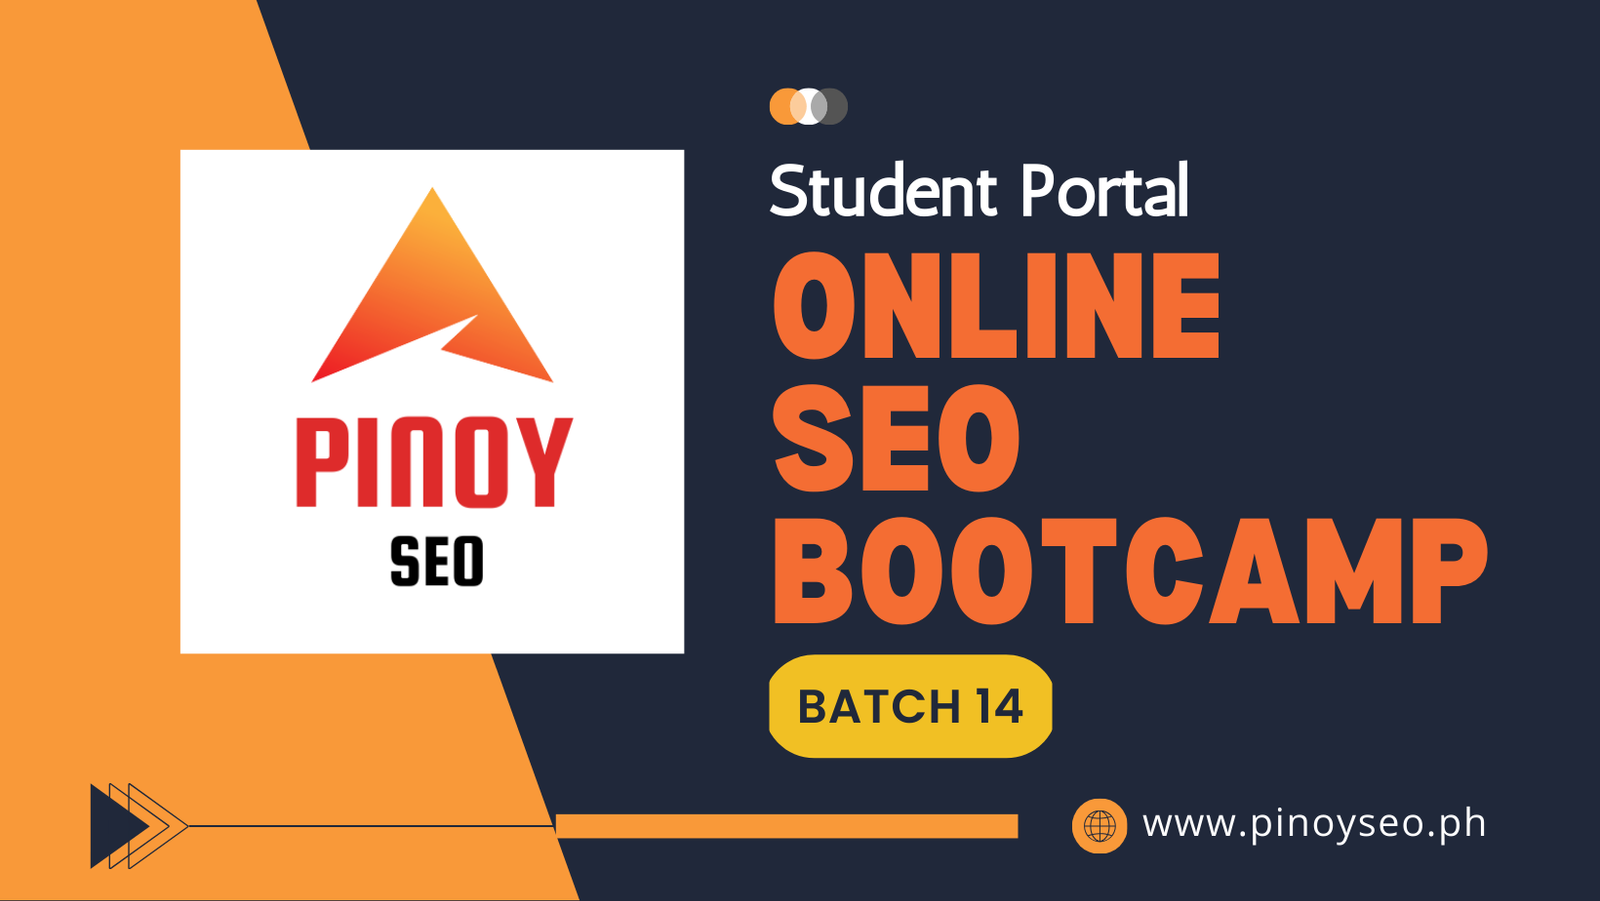 SEO Bootcamp – Batch 14 Student Portal